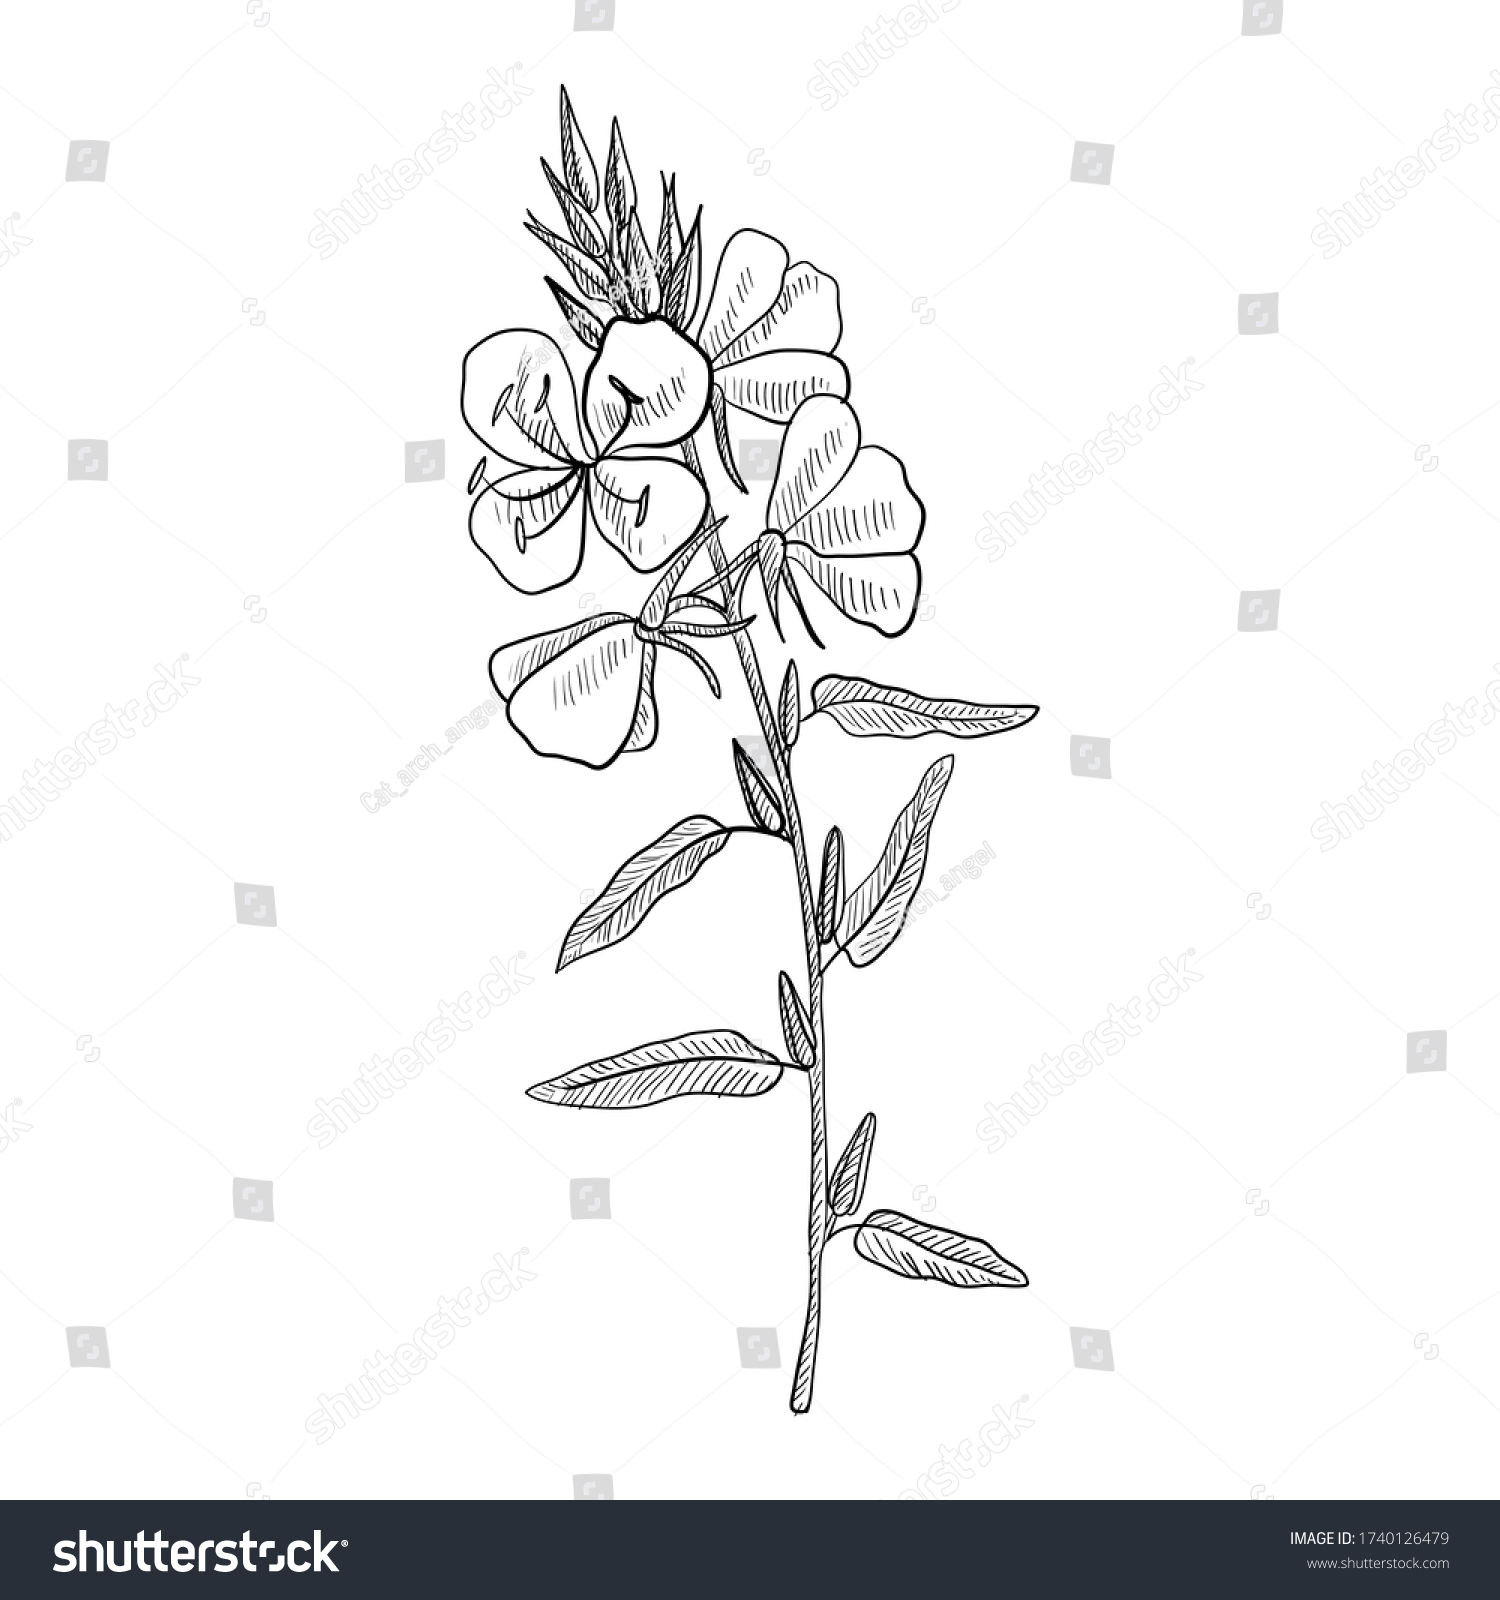 vector drawing evening primrose flower ,Oenothera , hand drawn illustration #1740126479